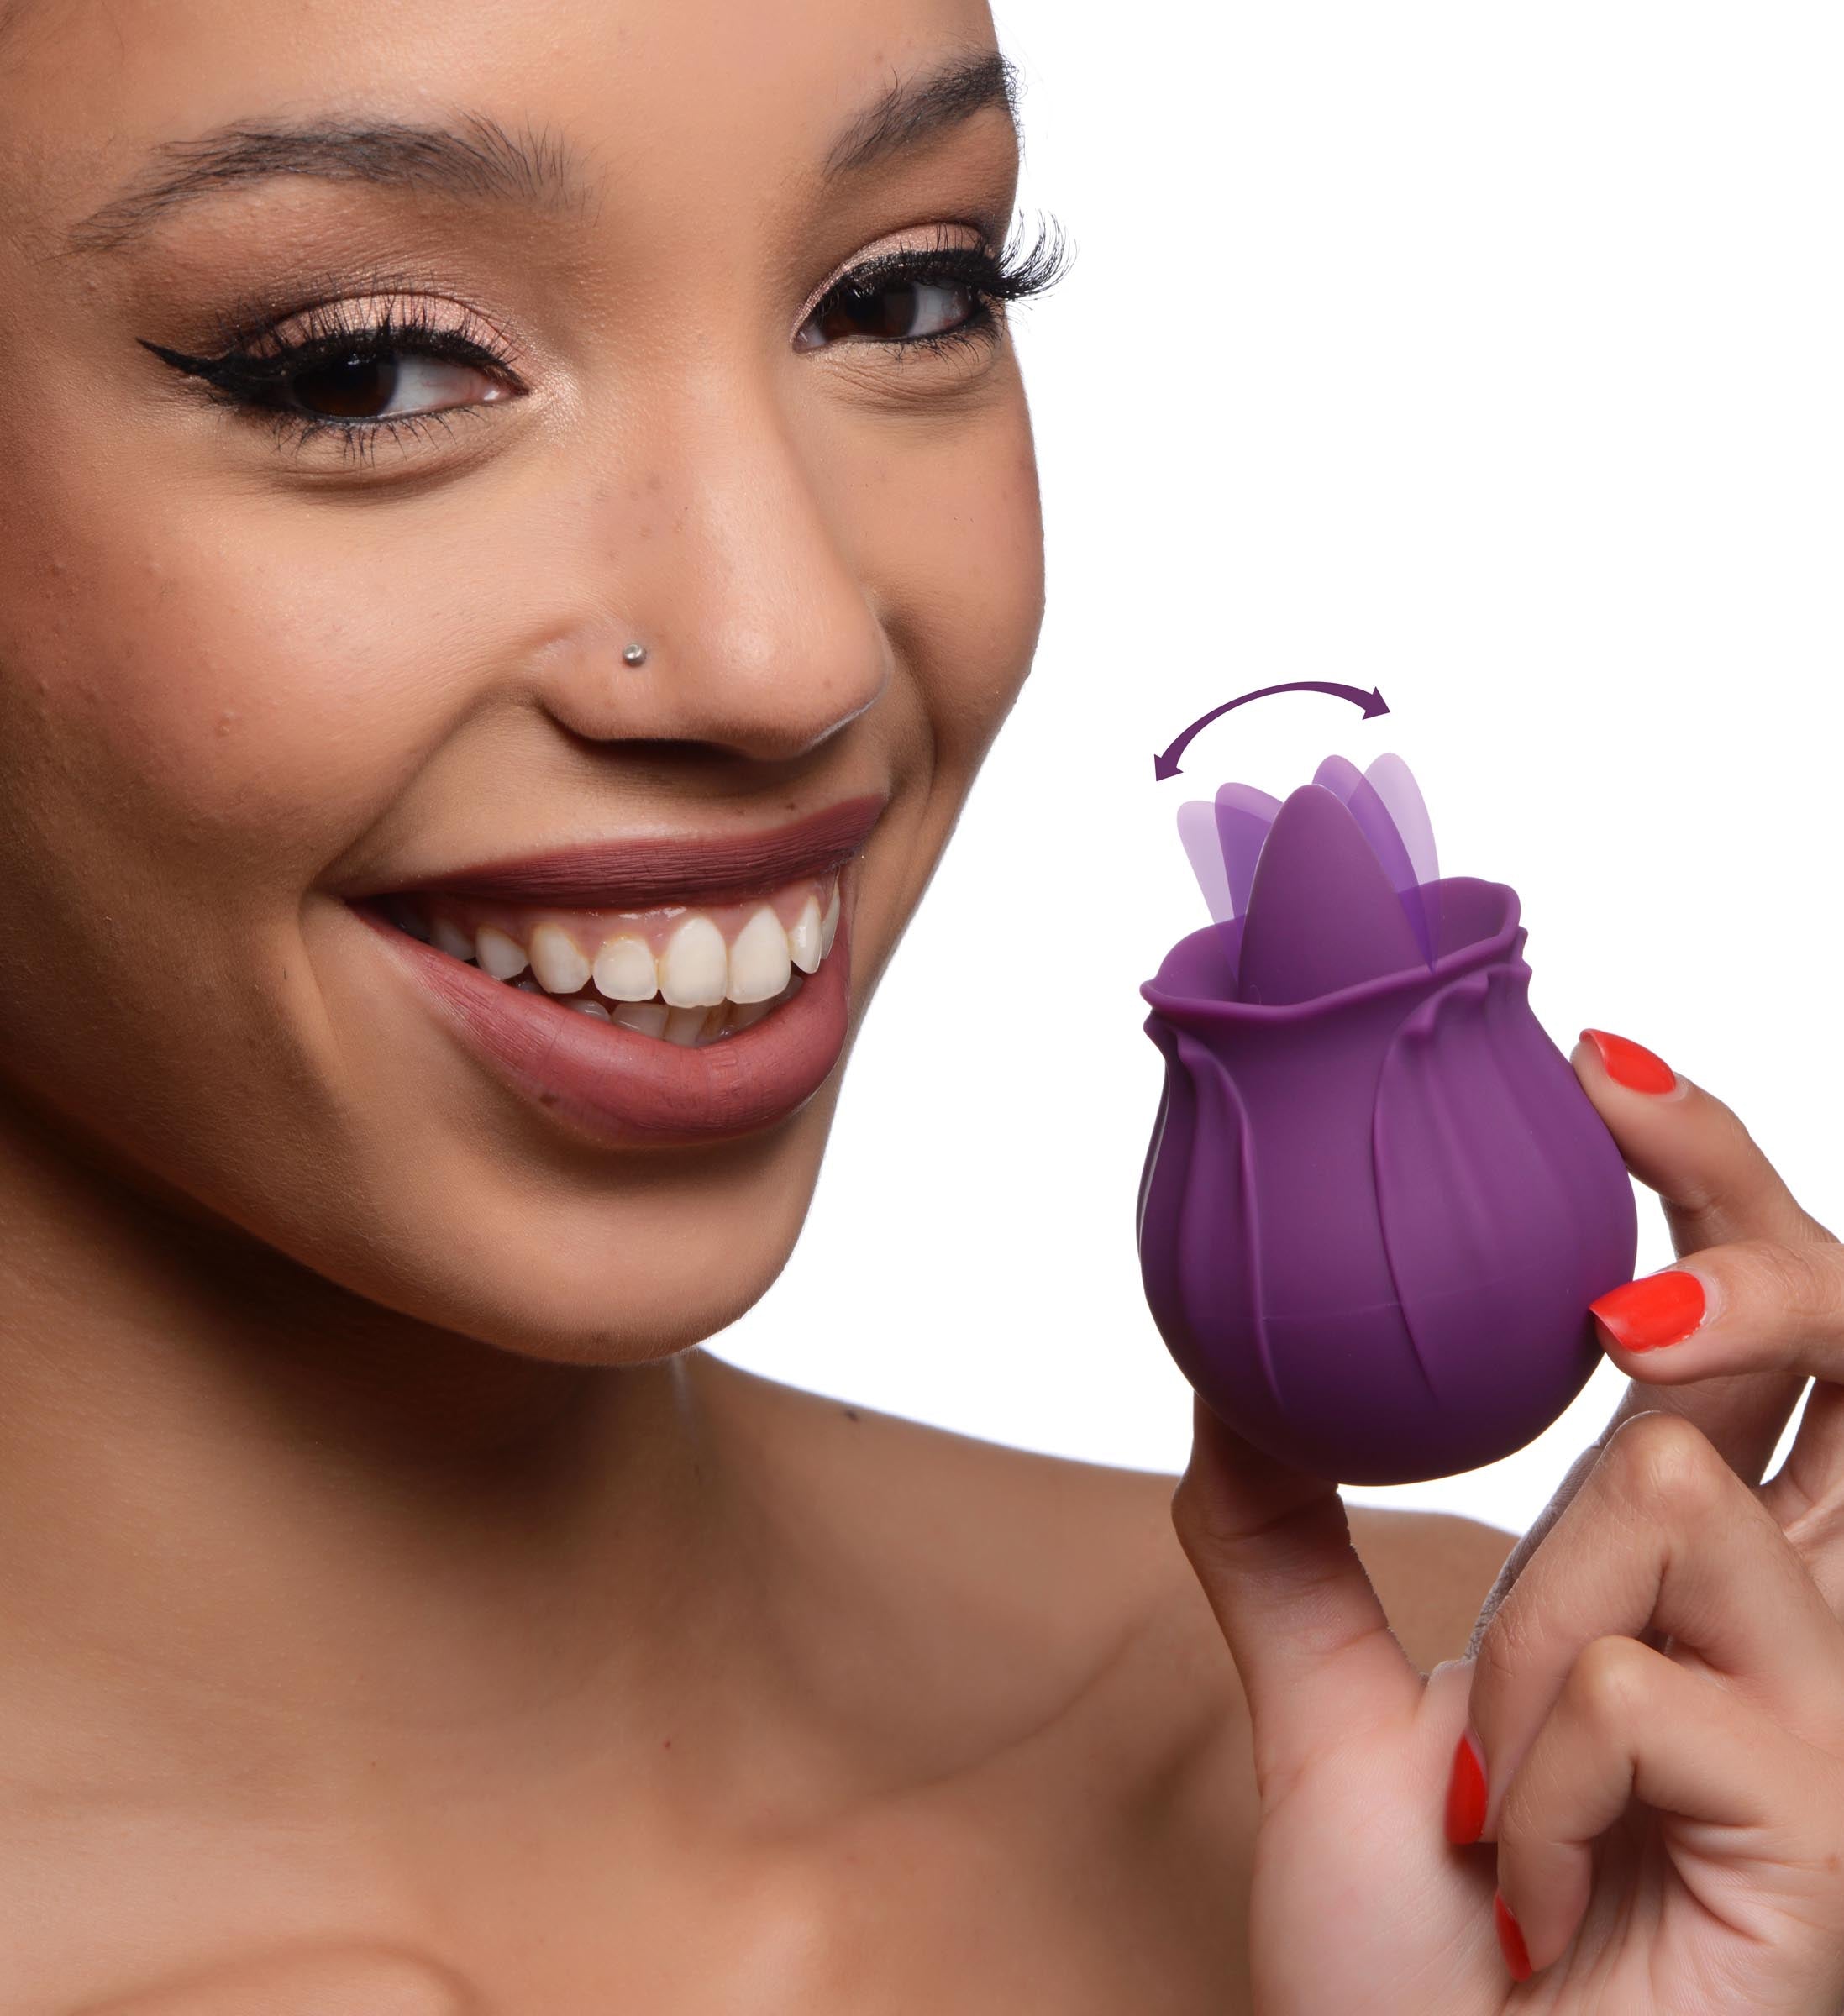 Bloomgasm Wild Violet 10X Silicone Clit Licking Stimulator - Purple